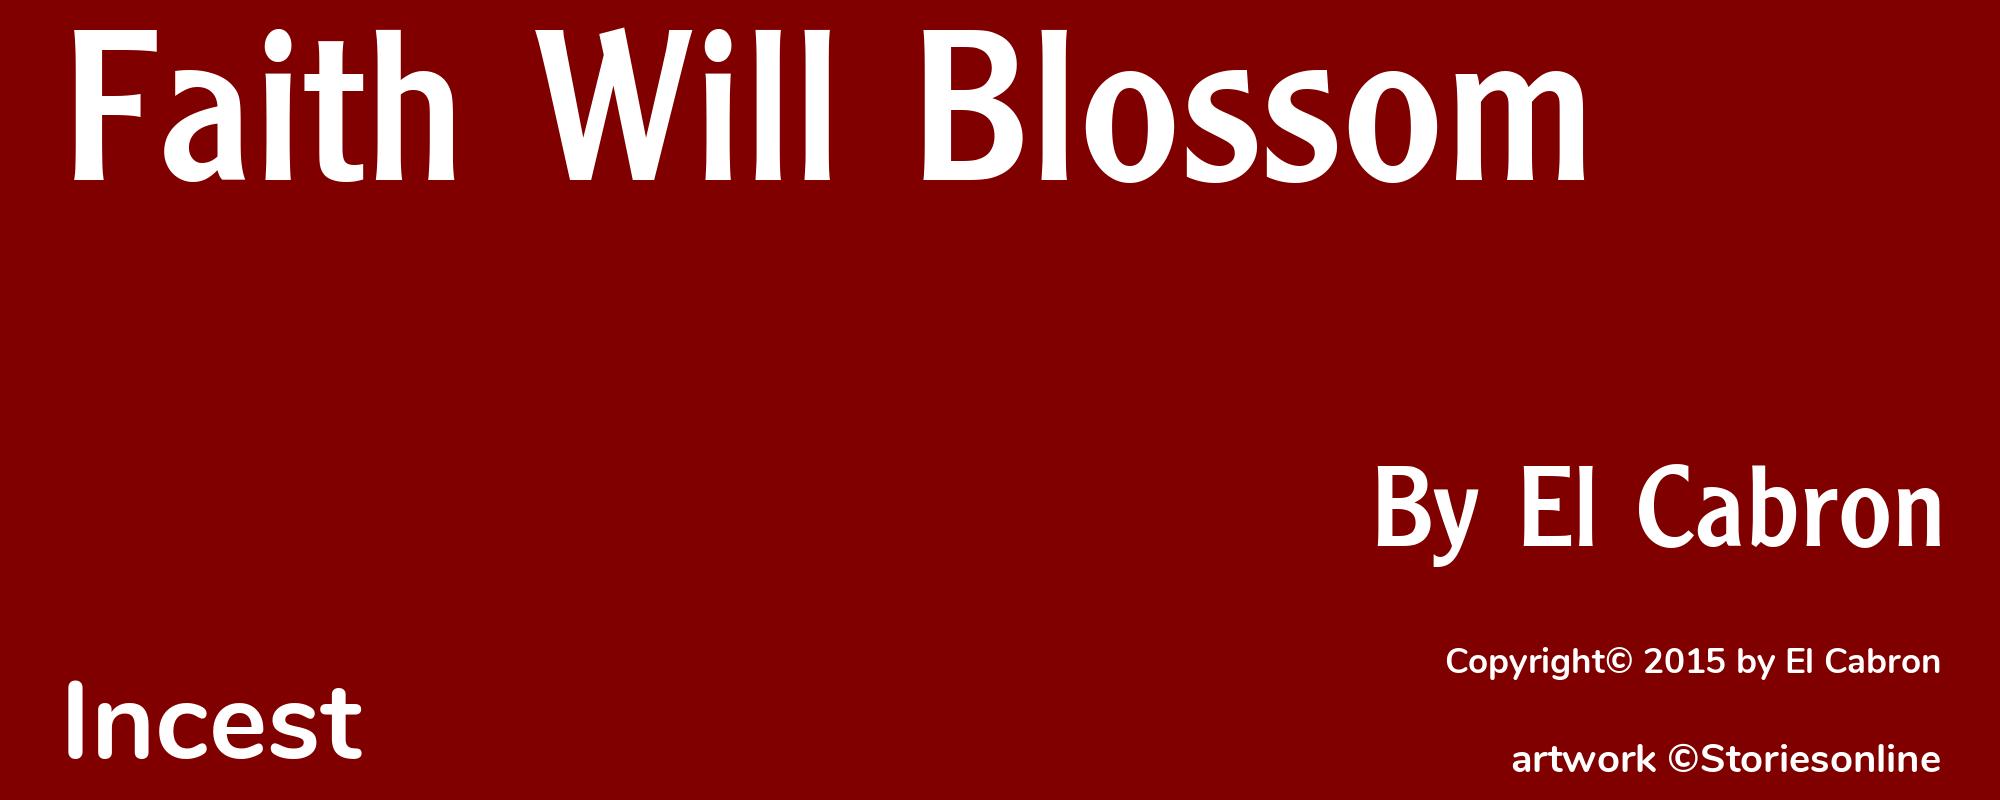 Faith Will Blossom - Cover